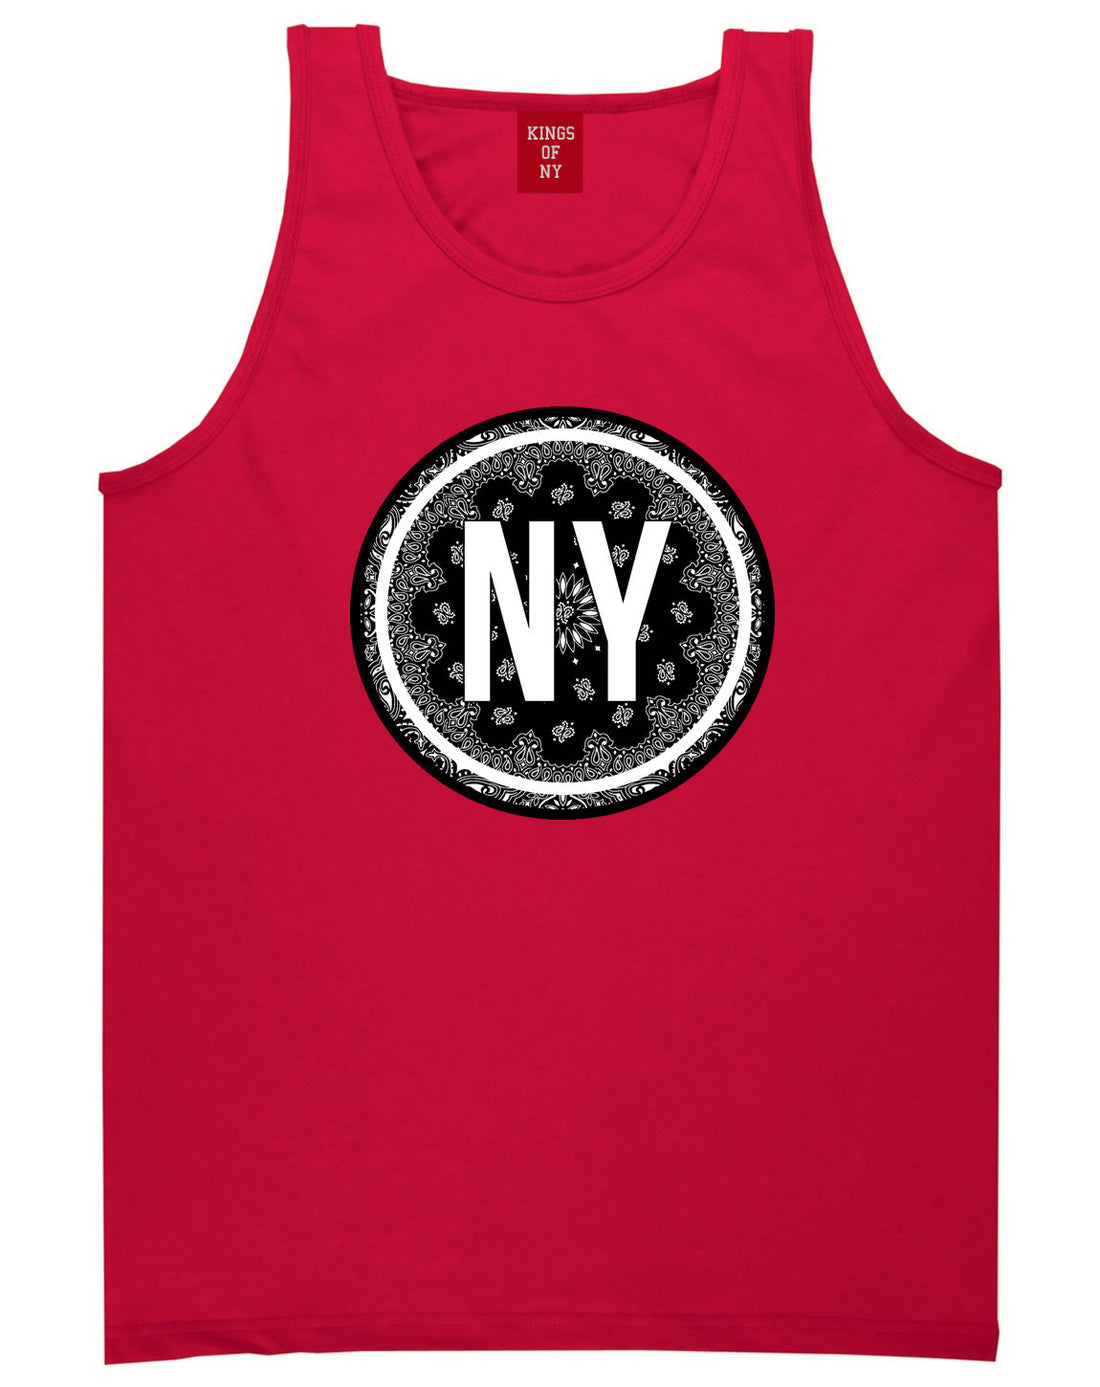 Kings Of NY New York Bandana Print NYC Tank Top in Red